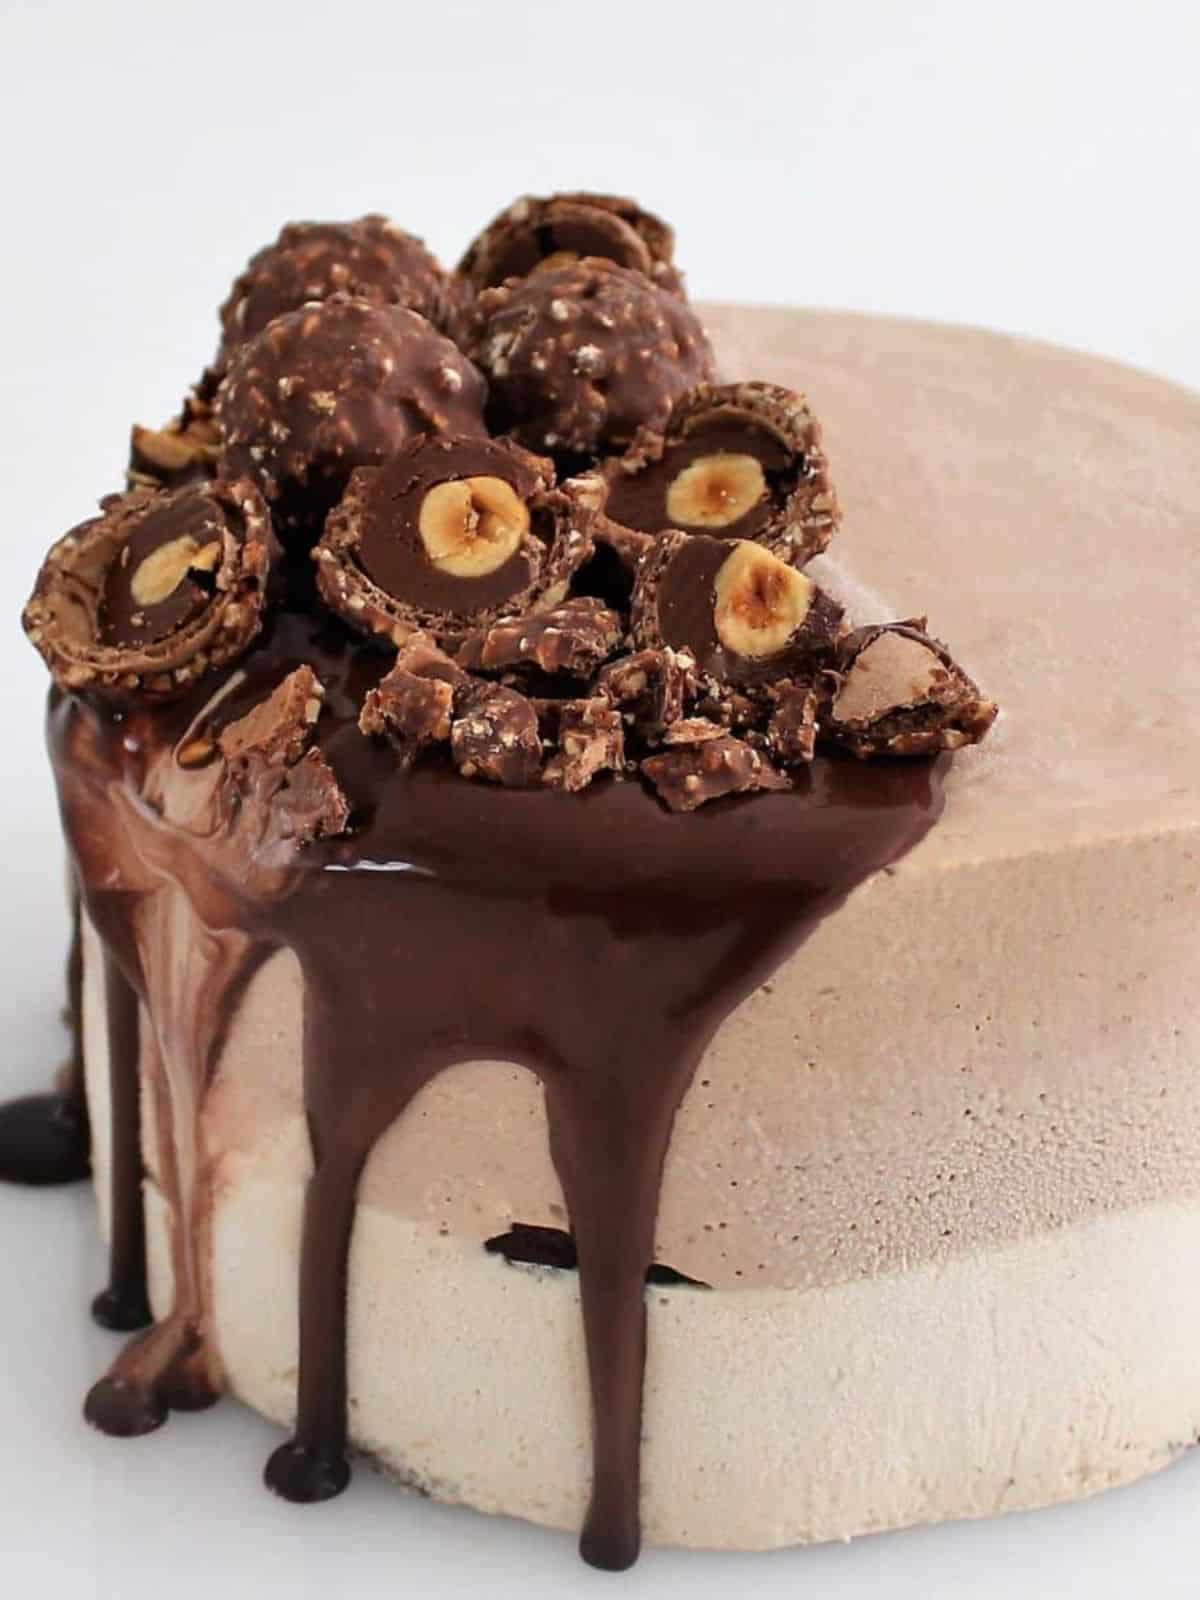 Nutella ice cream cake featuring a luscious crunch of Ferrero Rocher chocolates.